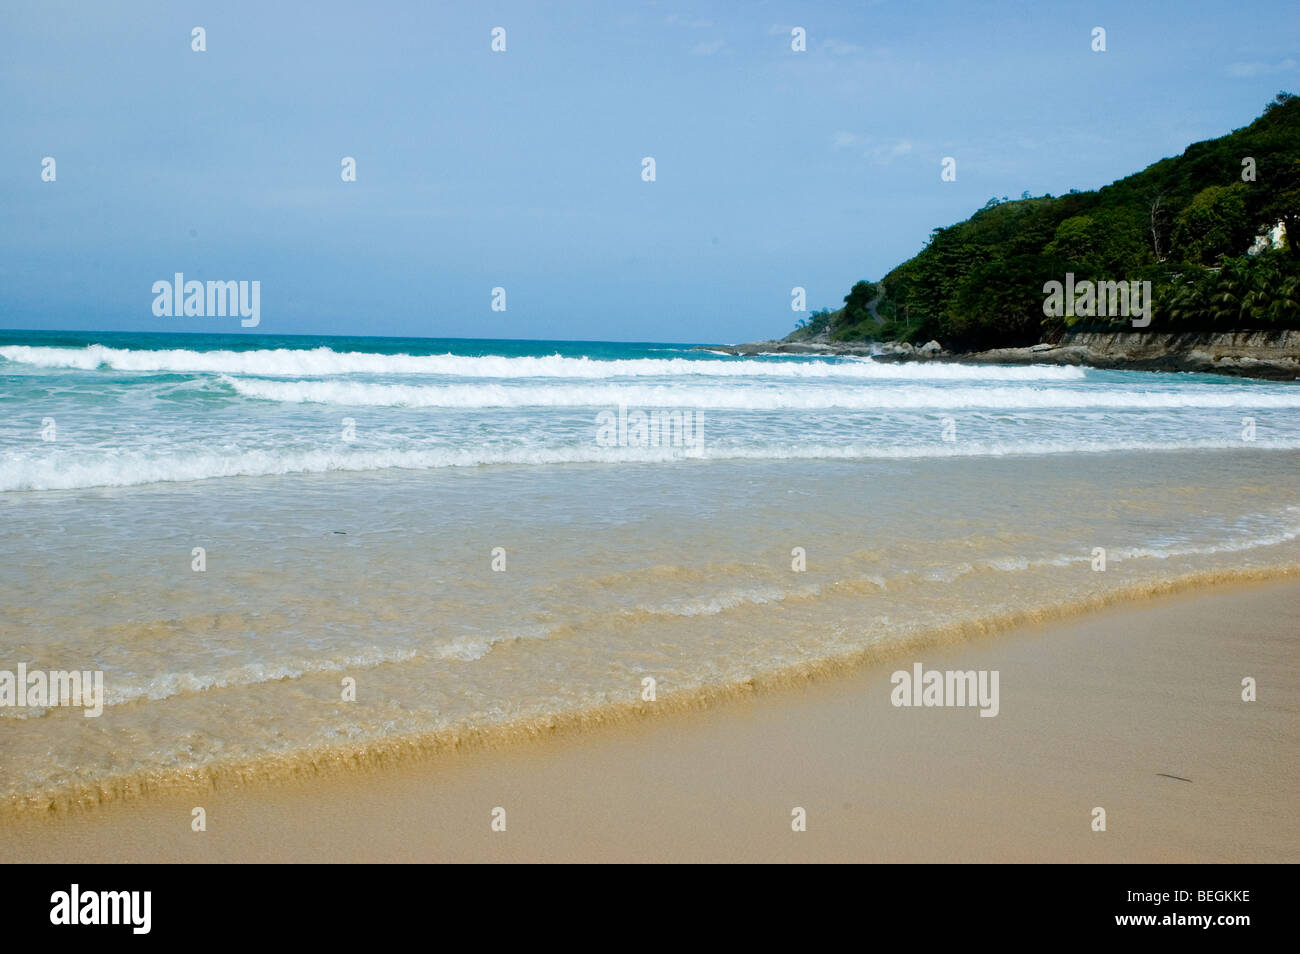 Thailand, Phuket Island - September 2009. Beautiful NaiHarn beach with clean sand and blue Andaman Sea. Stock Photo